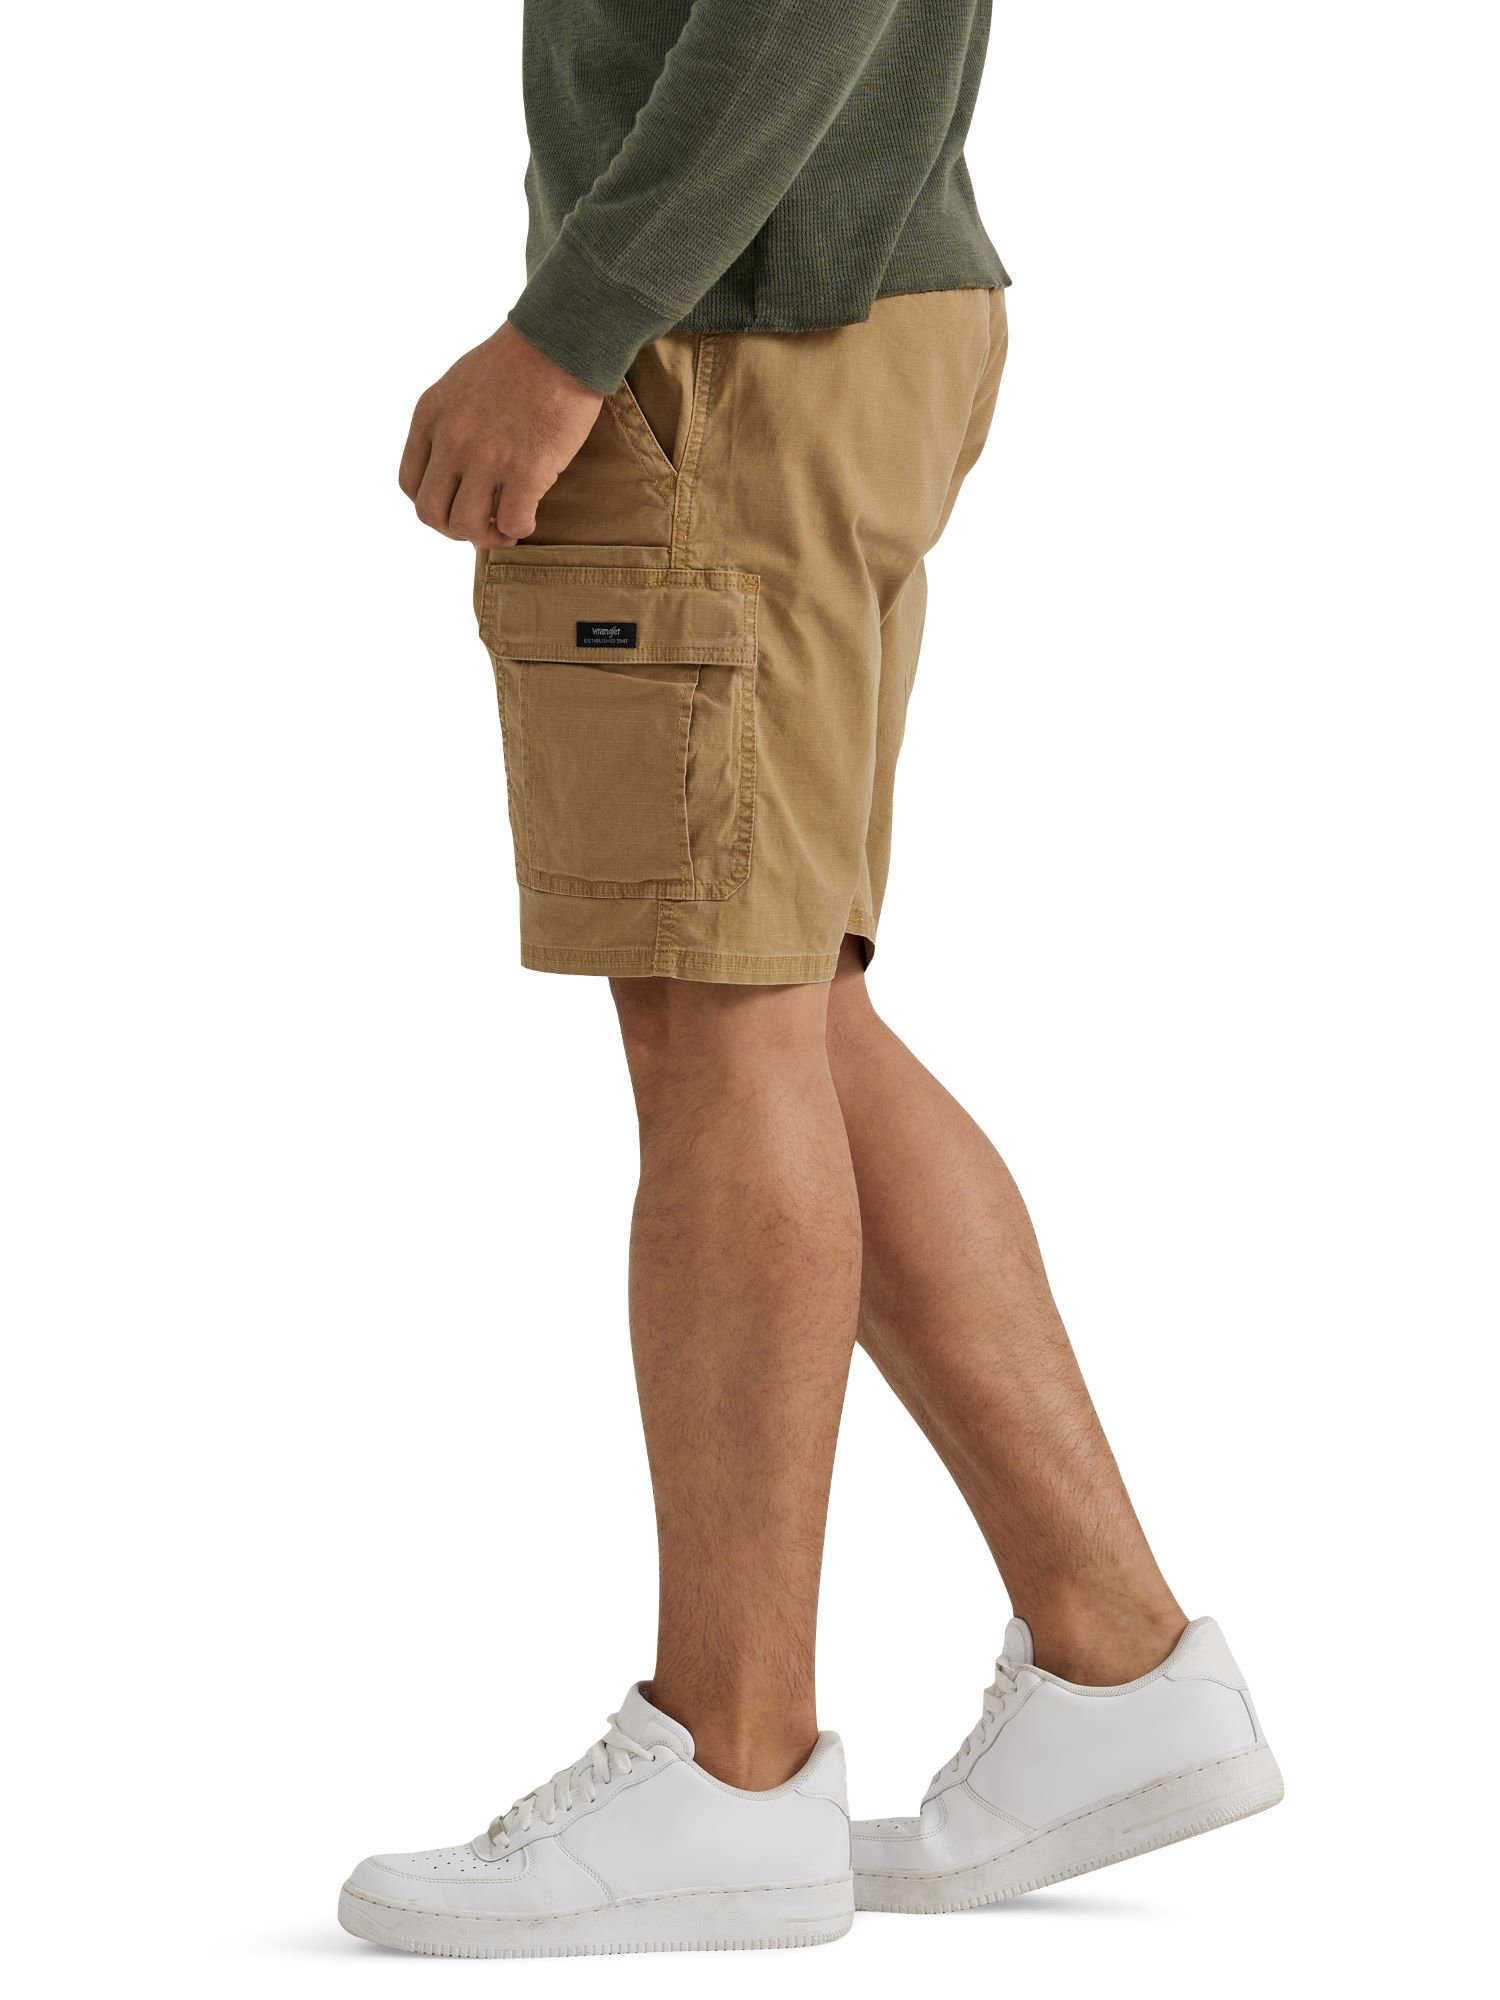 Wrangler Men's and Big Men's Stretch Cargo Shorts - image 5 of 10